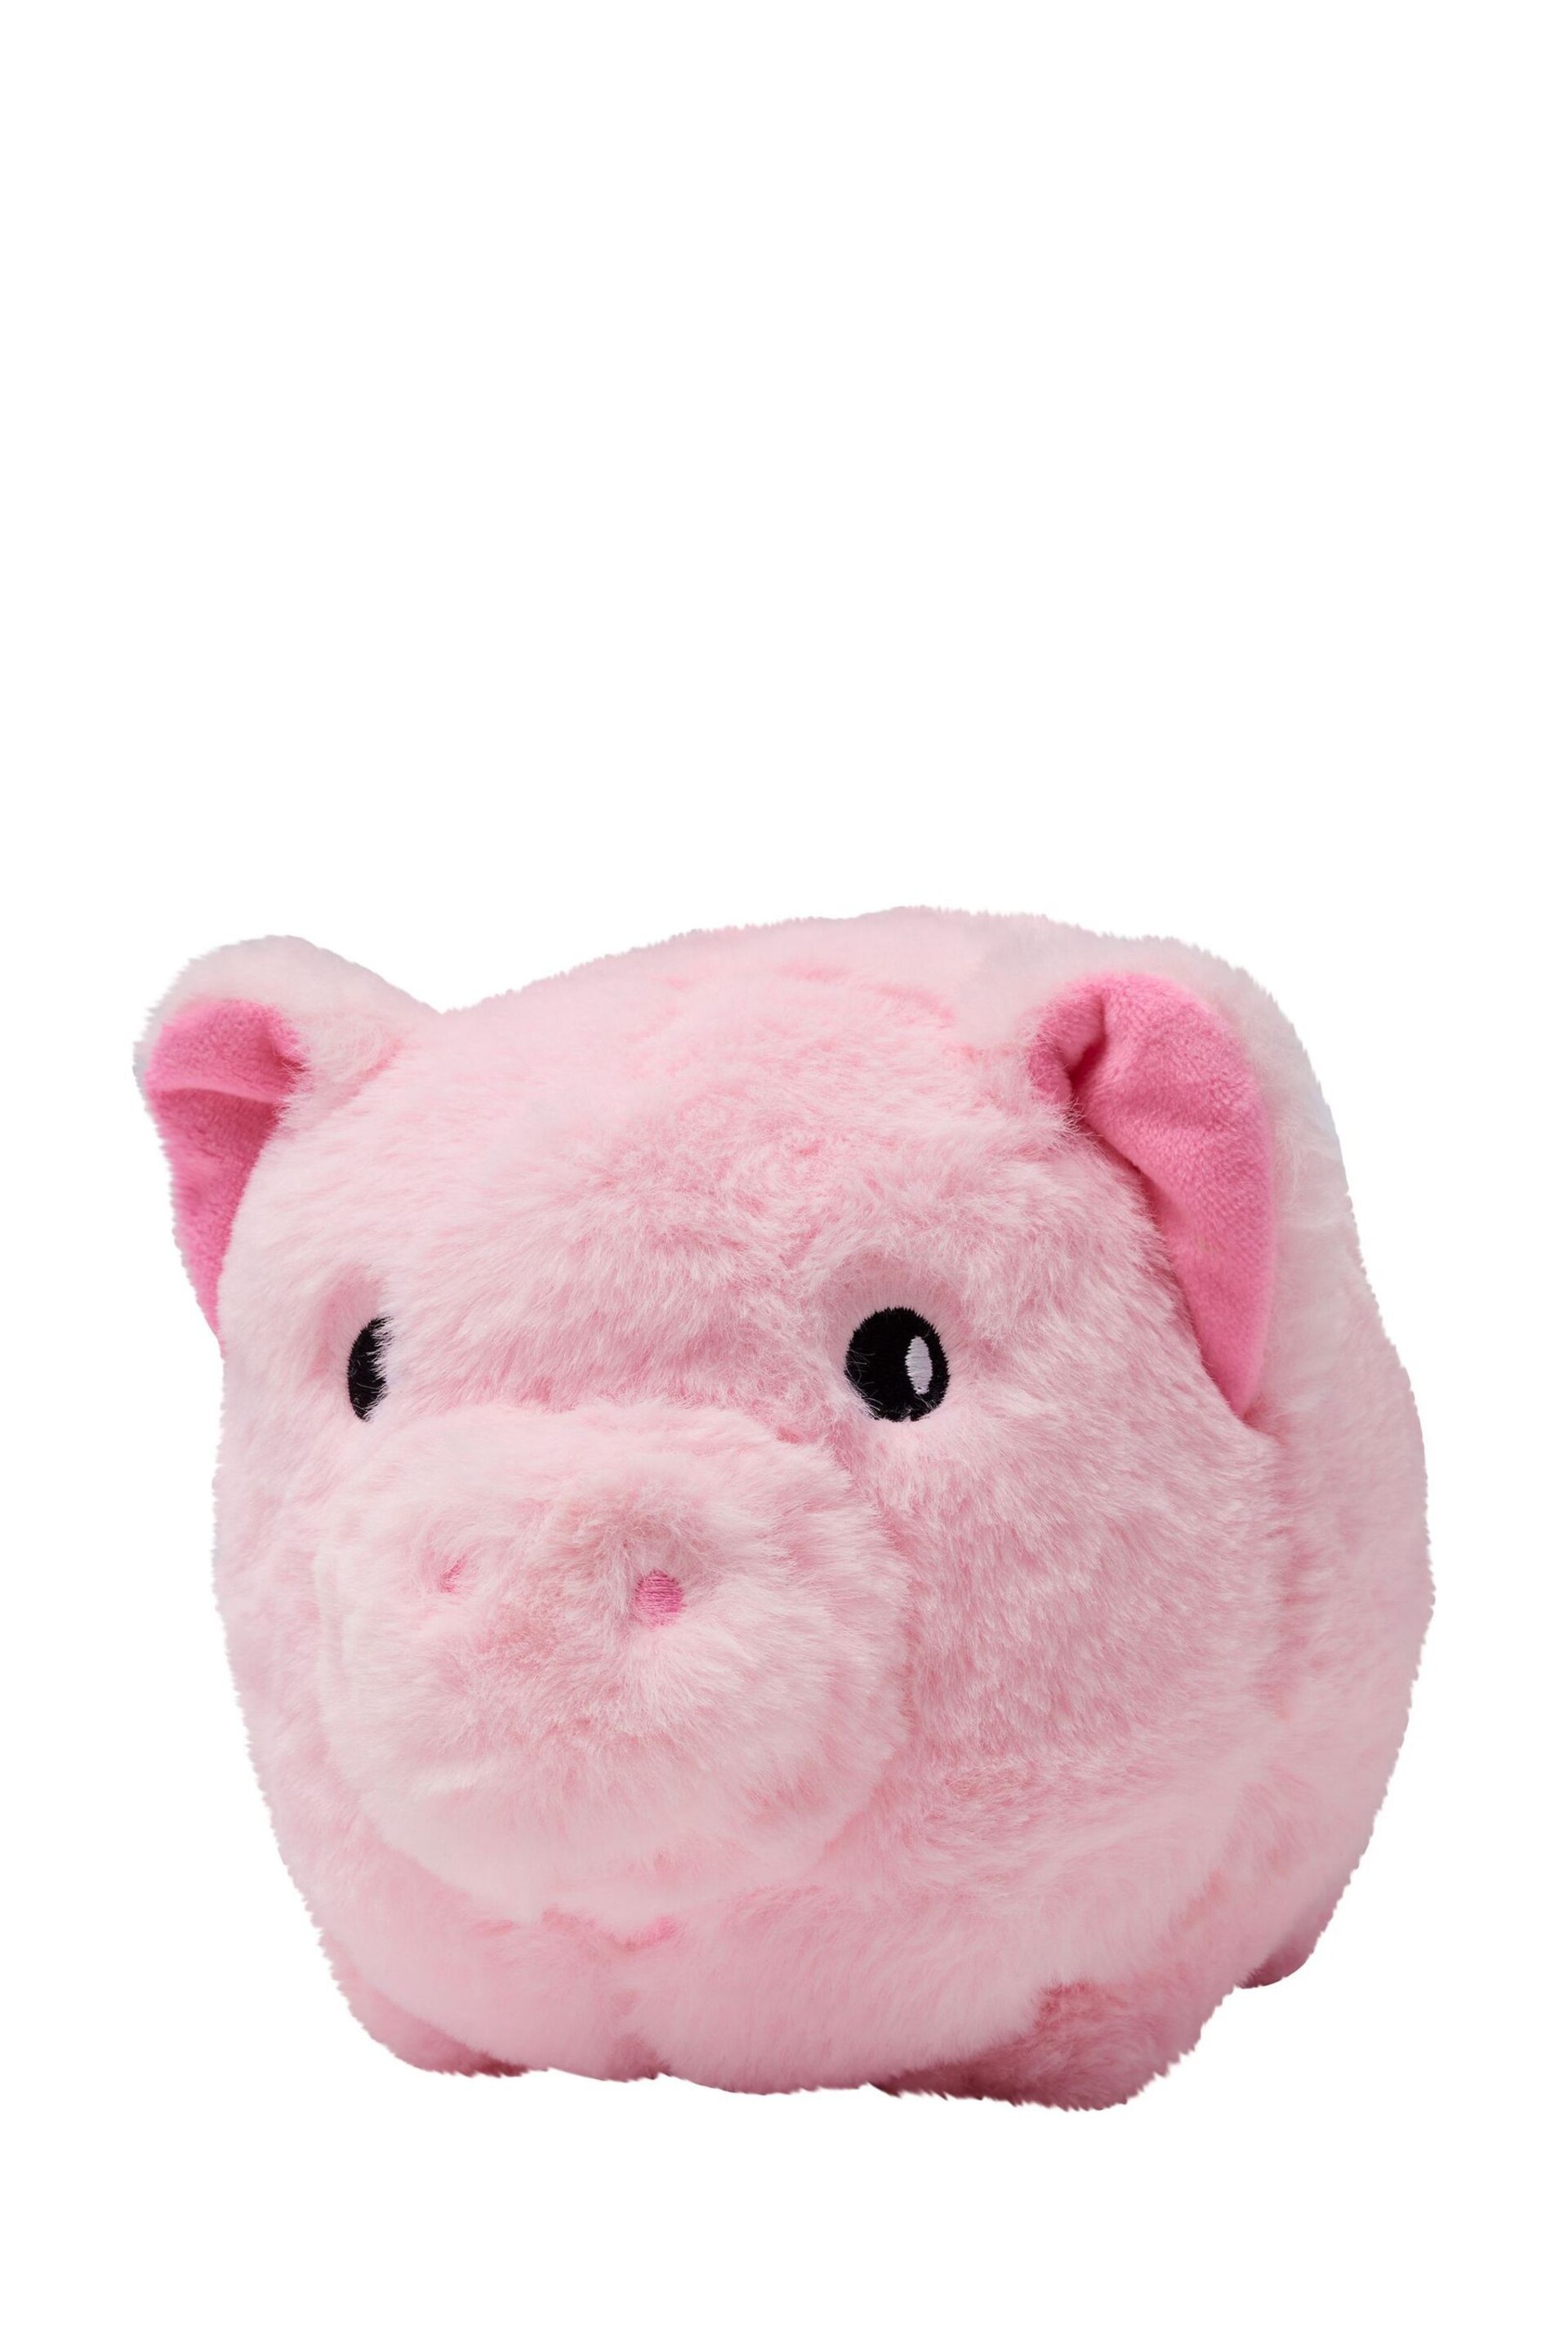 Smiggle Pink Plush Piggy Moneybox - Image 1 of 3